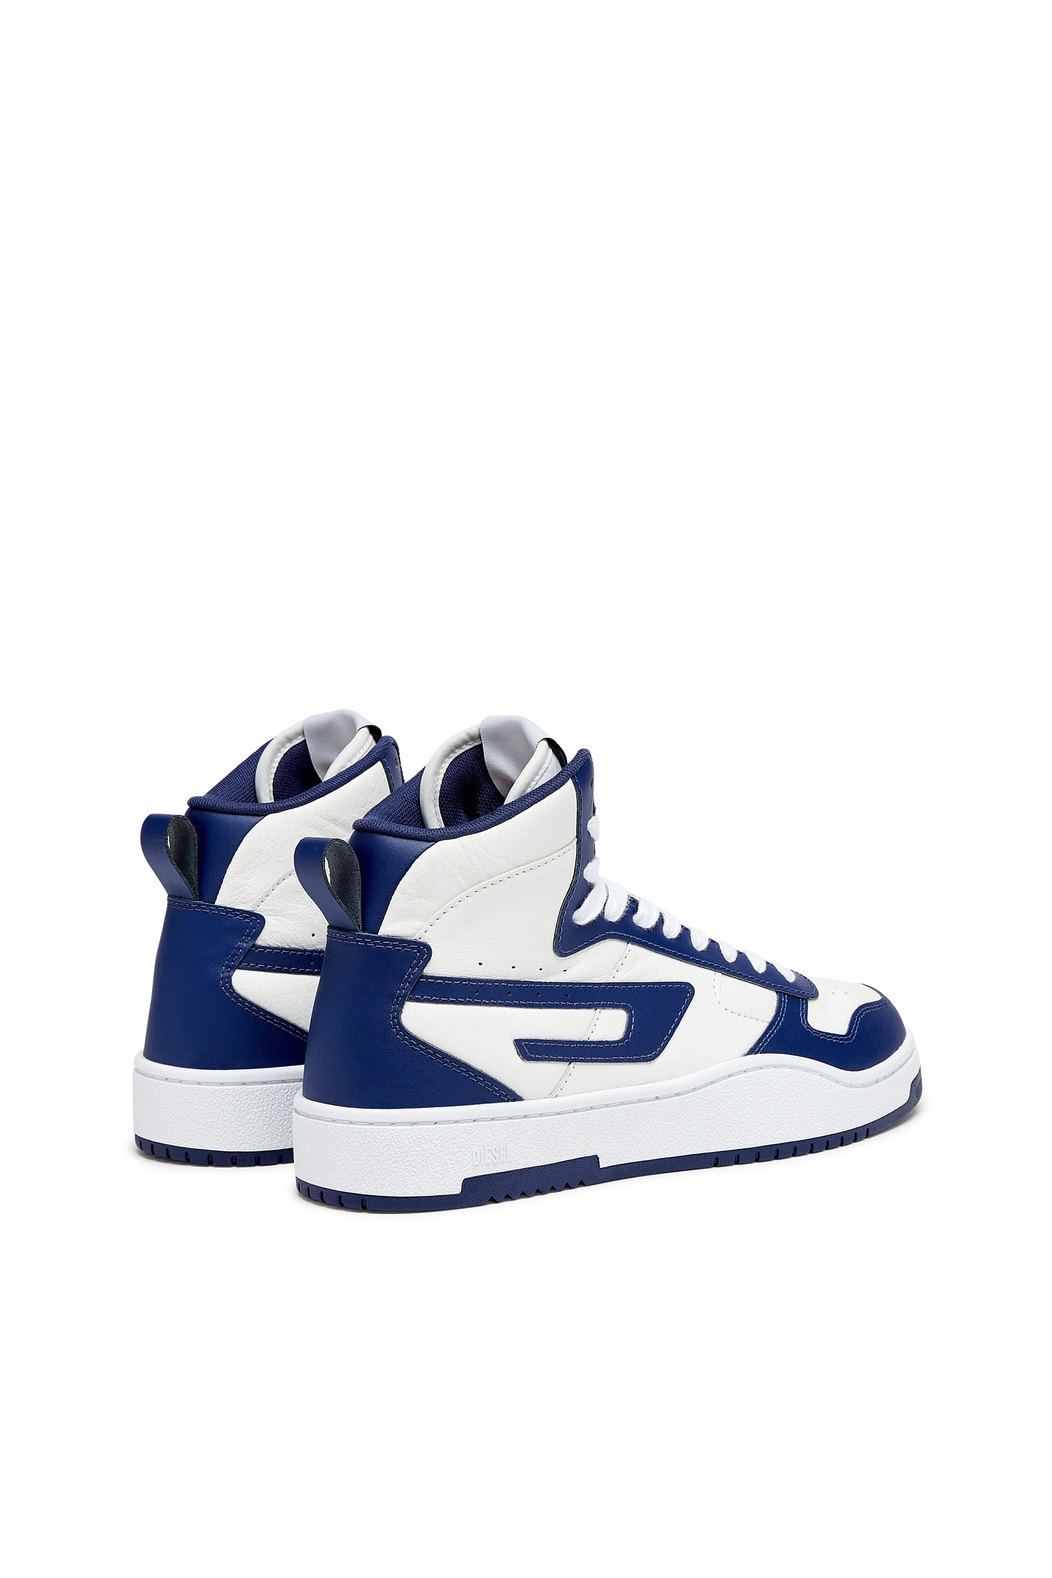 S-Ukiyo V2 Mid - High-top sneakers with D branding